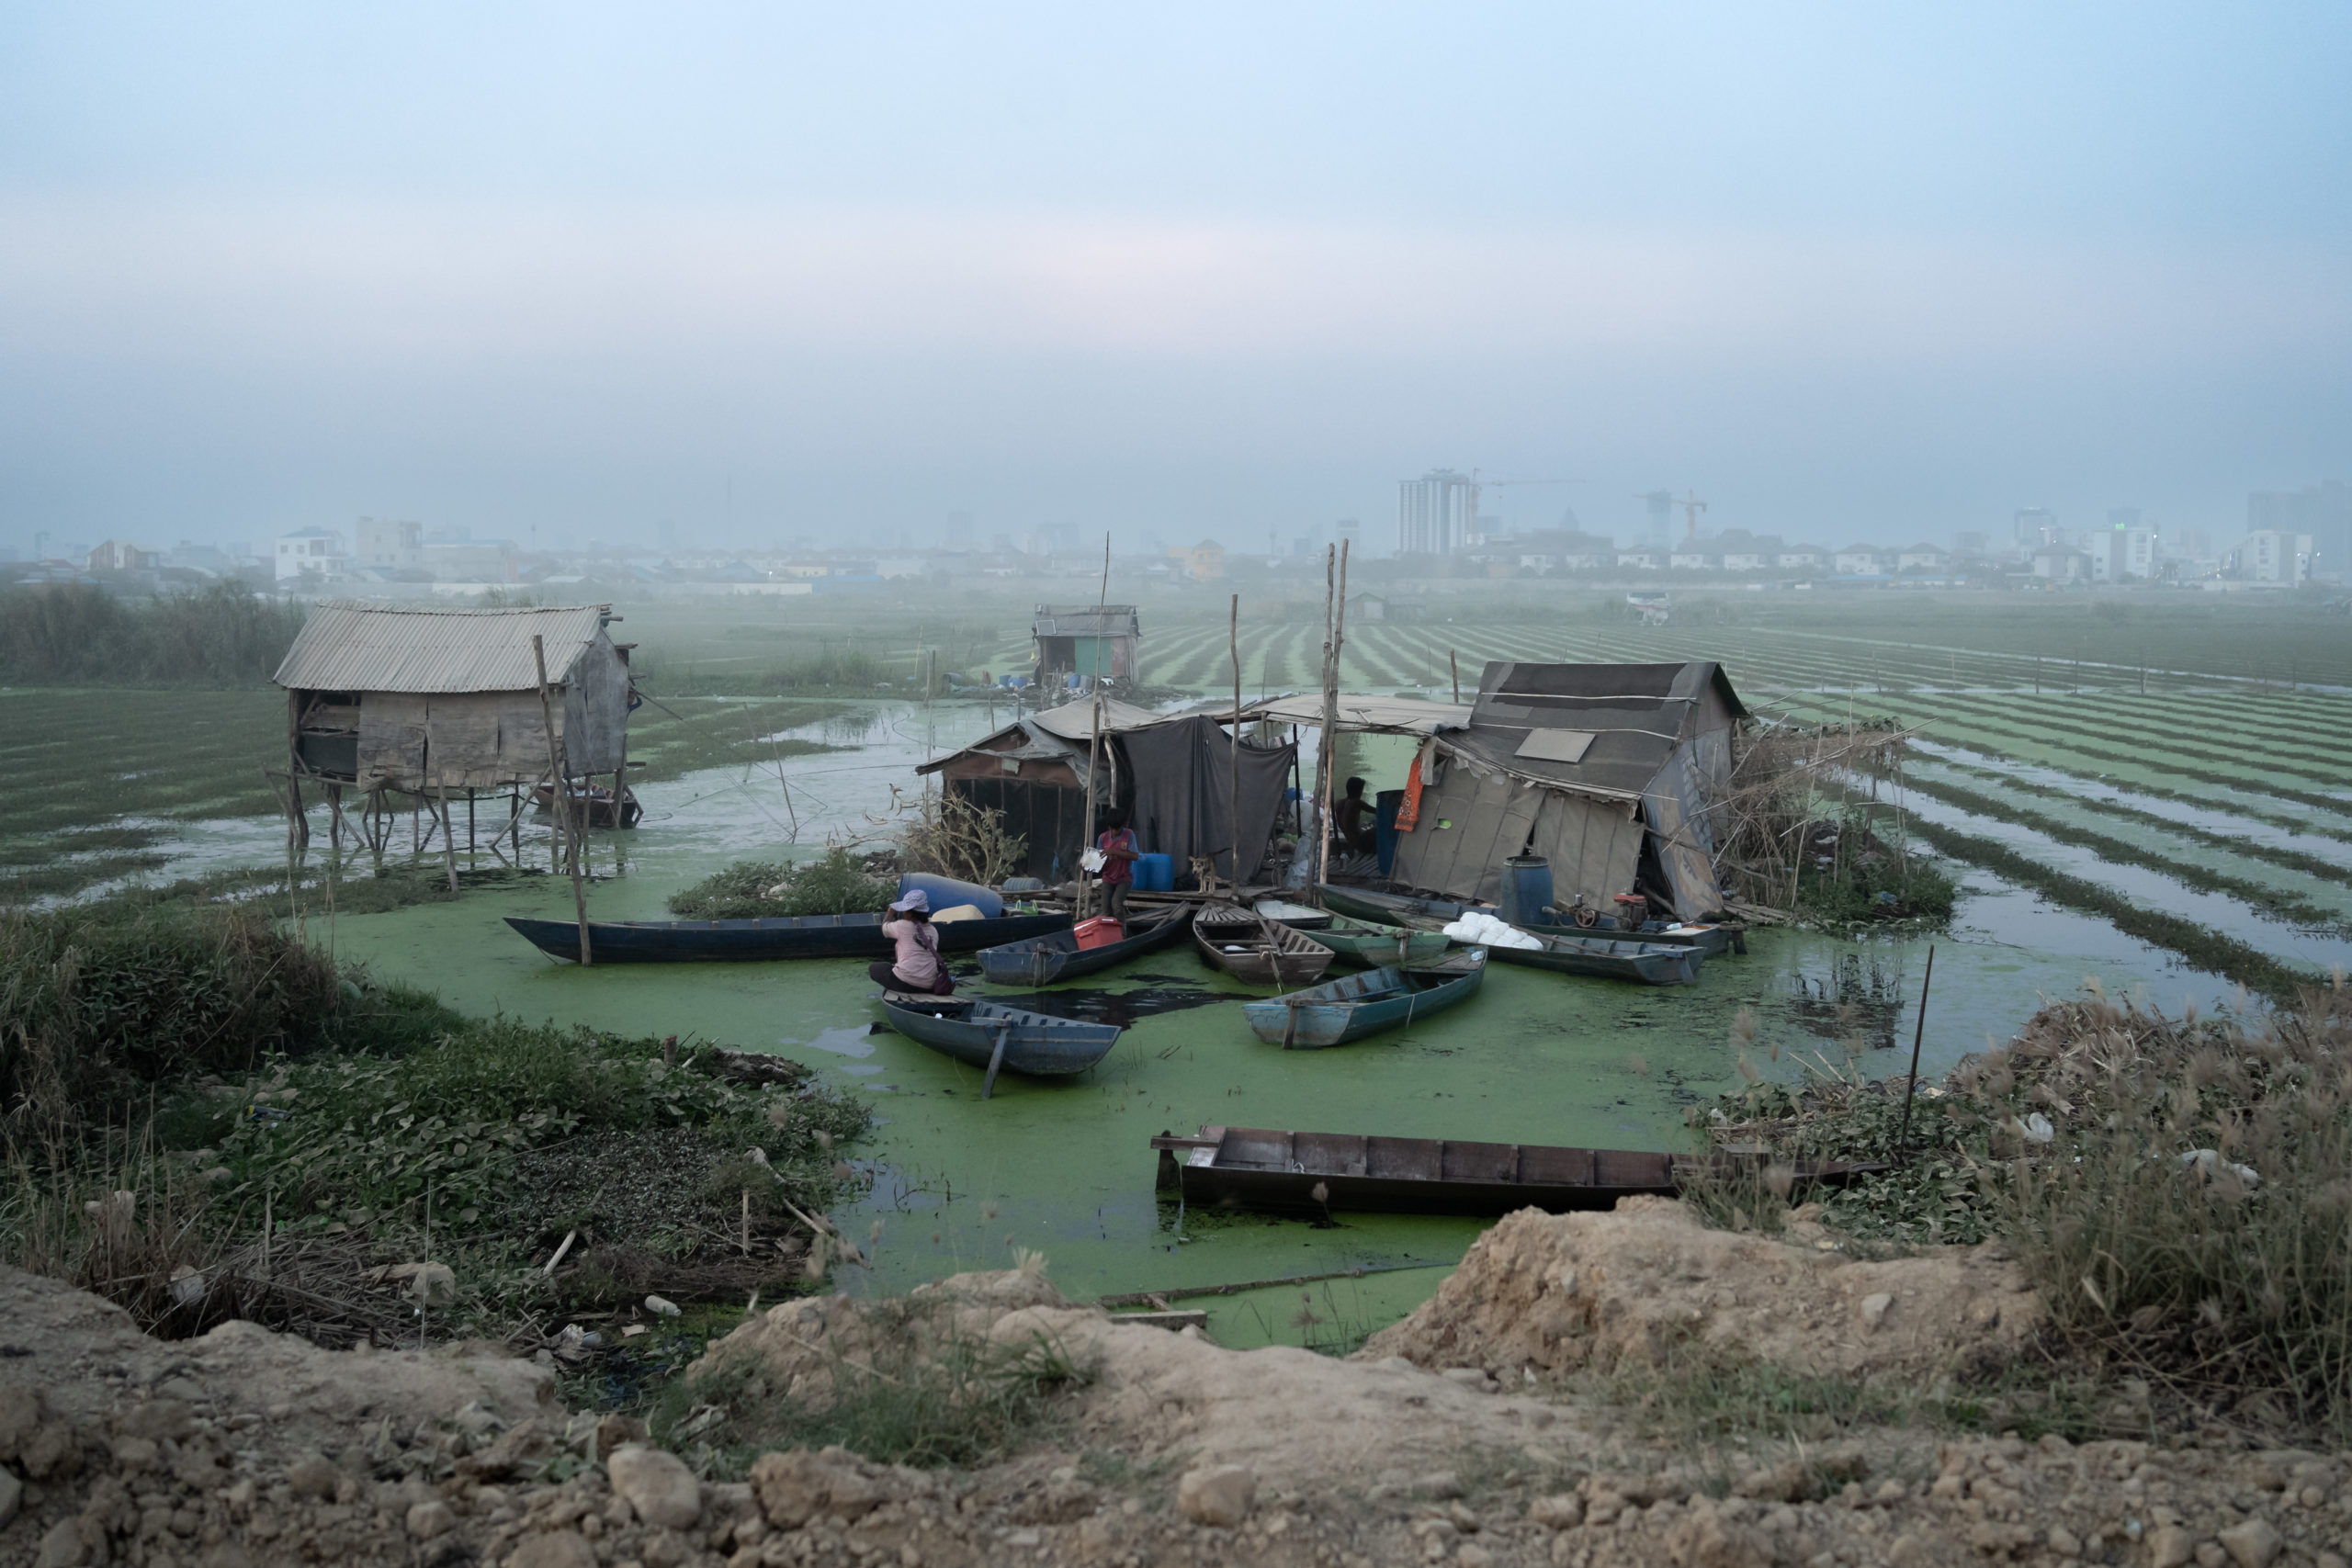 An uncertain future awaits those living around Phnom Penh's lakes